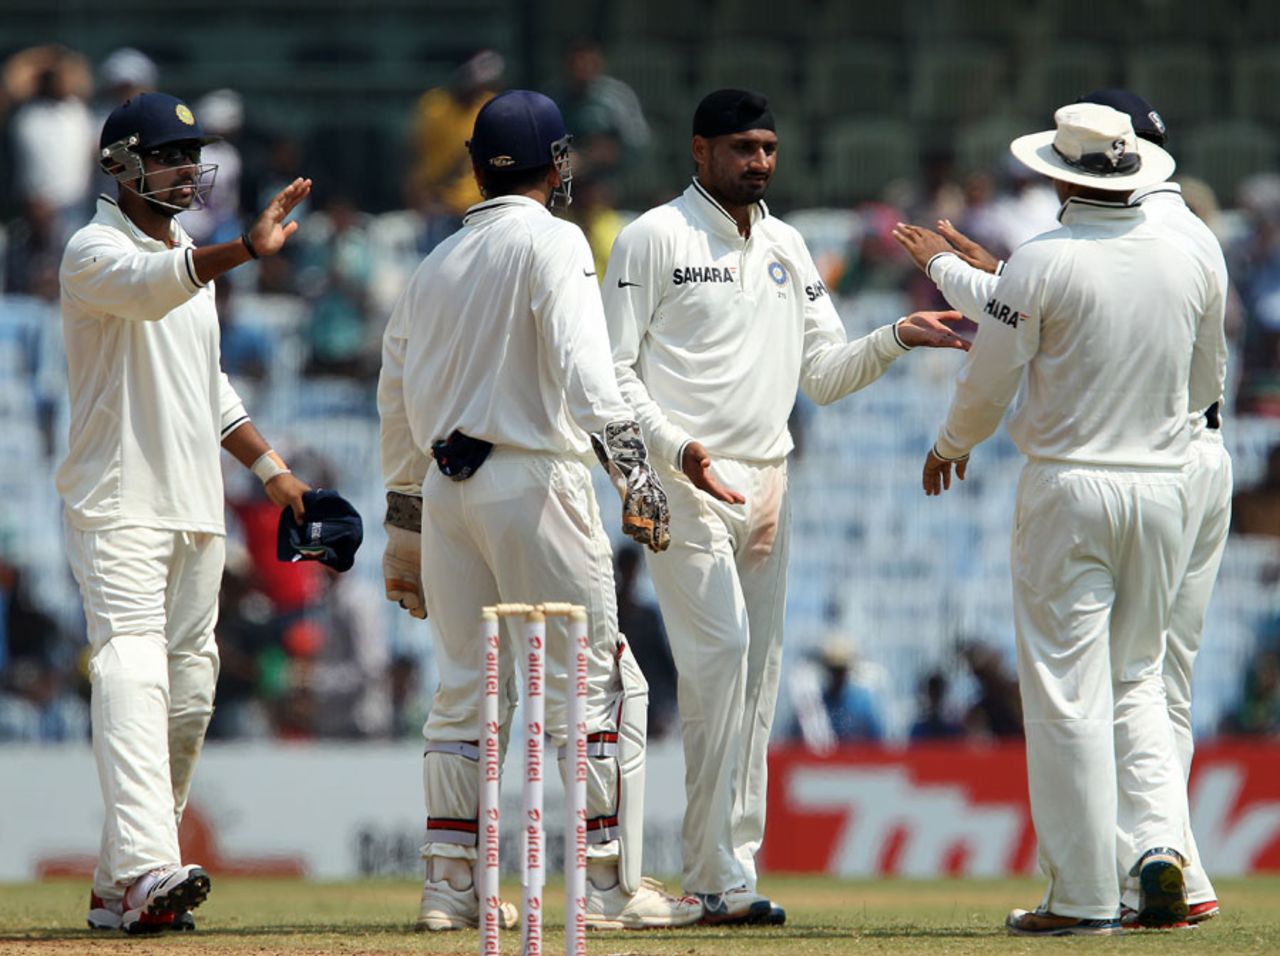 India get together after Harbhajan Singh strikes, India v Australia, 1st Test, Chennai, 2nd day, February 23, 2013